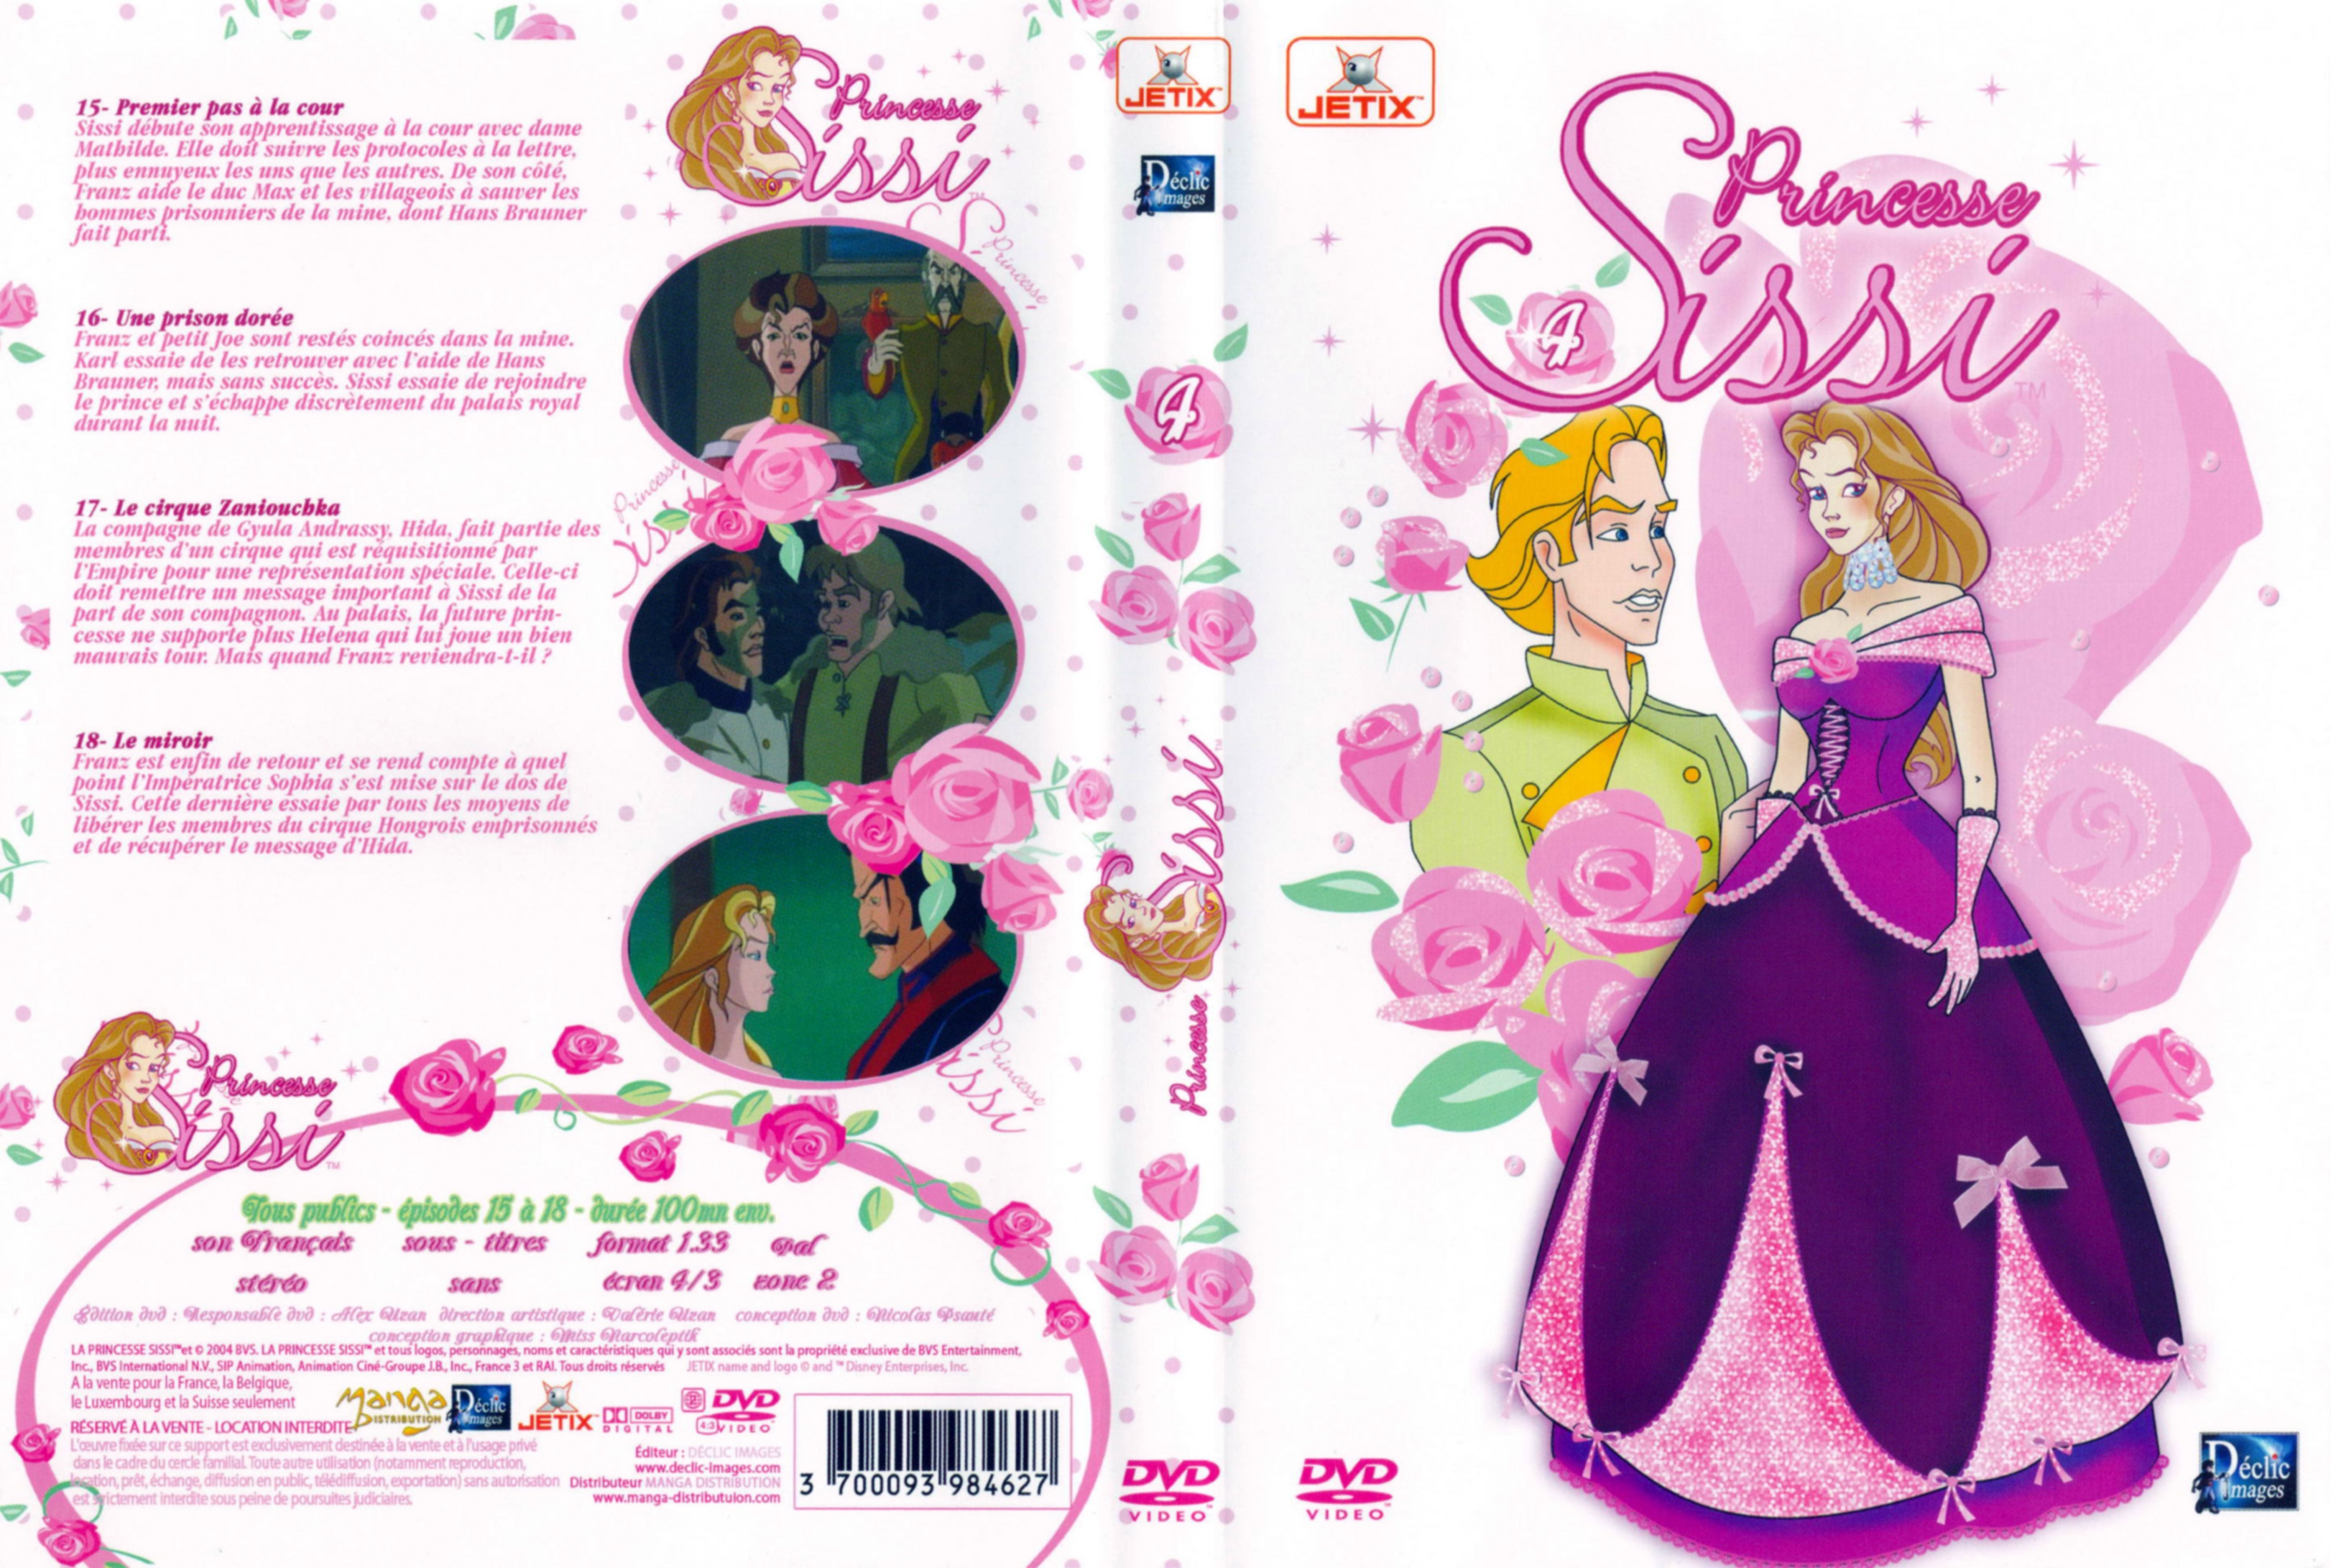 Jaquette DVD Princesse Sissi vol 4